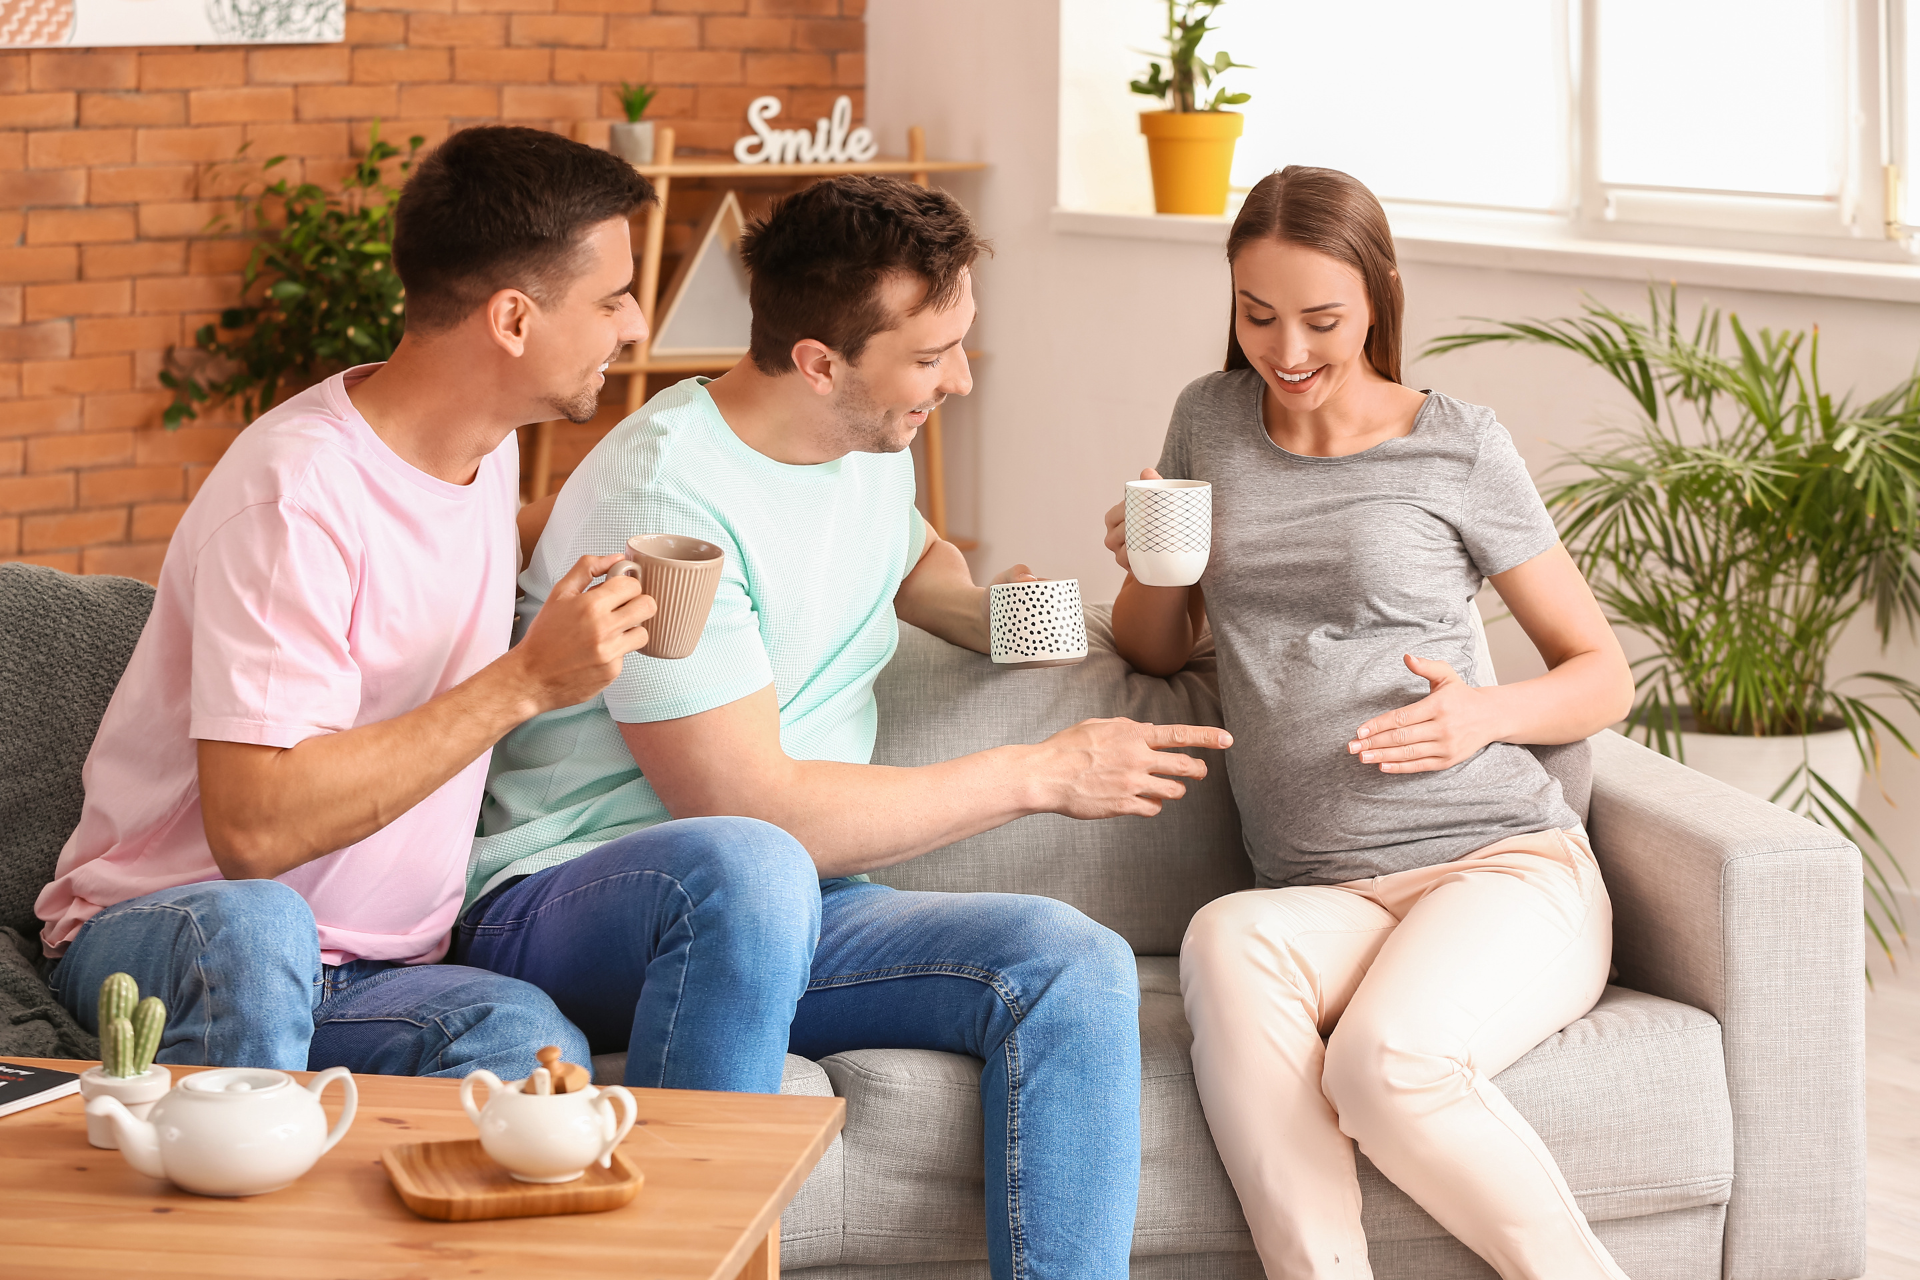 Adoptive Parents, Meet the Expectant Mom